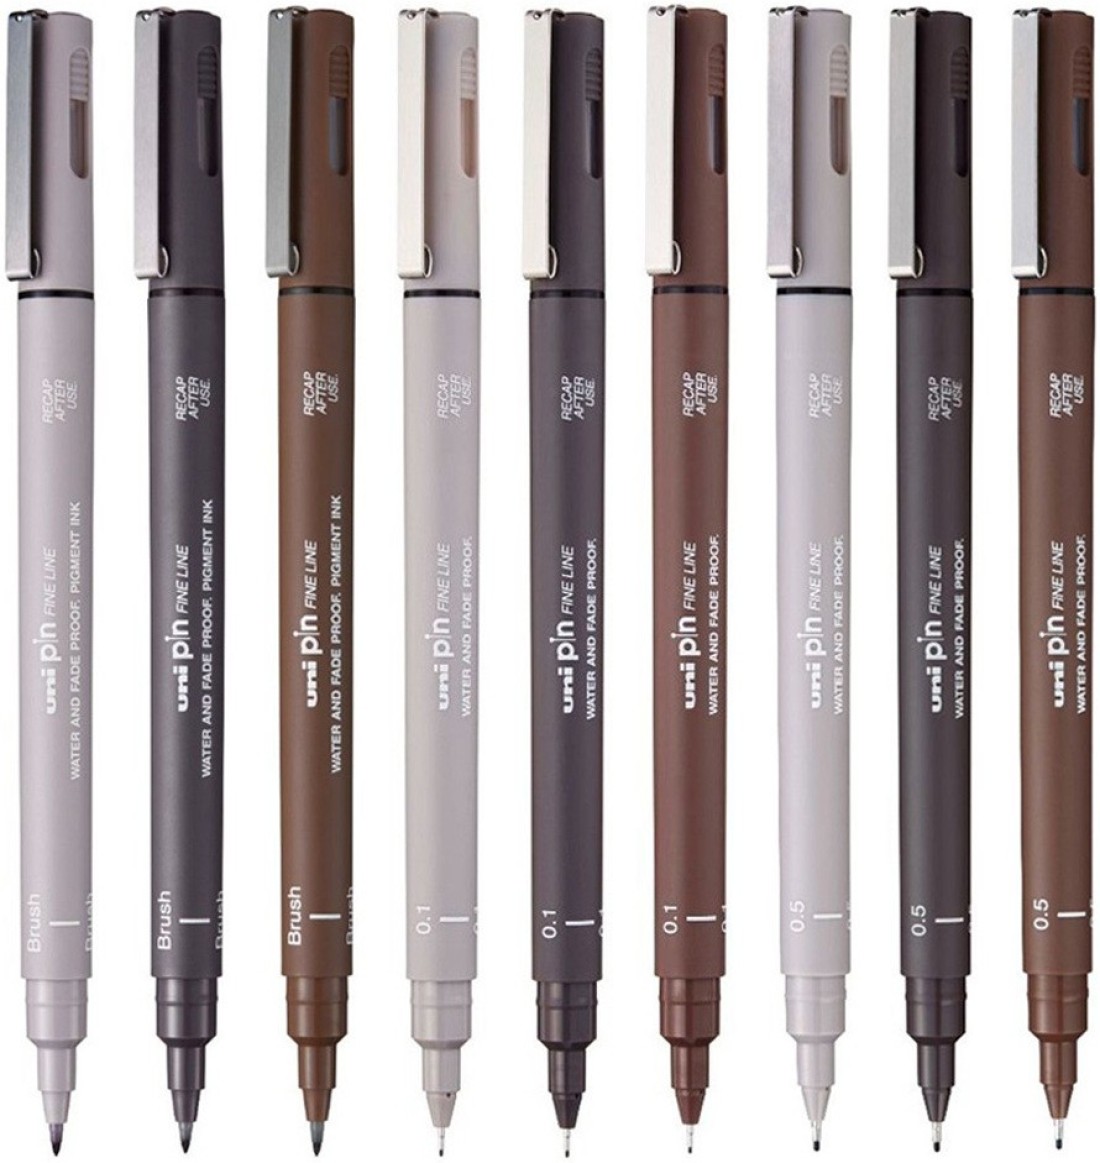 Uni Pin Fineliner Drawing Pen Set of 8, 0.1mm 0.8mm & Brush Nib 3 Colours 